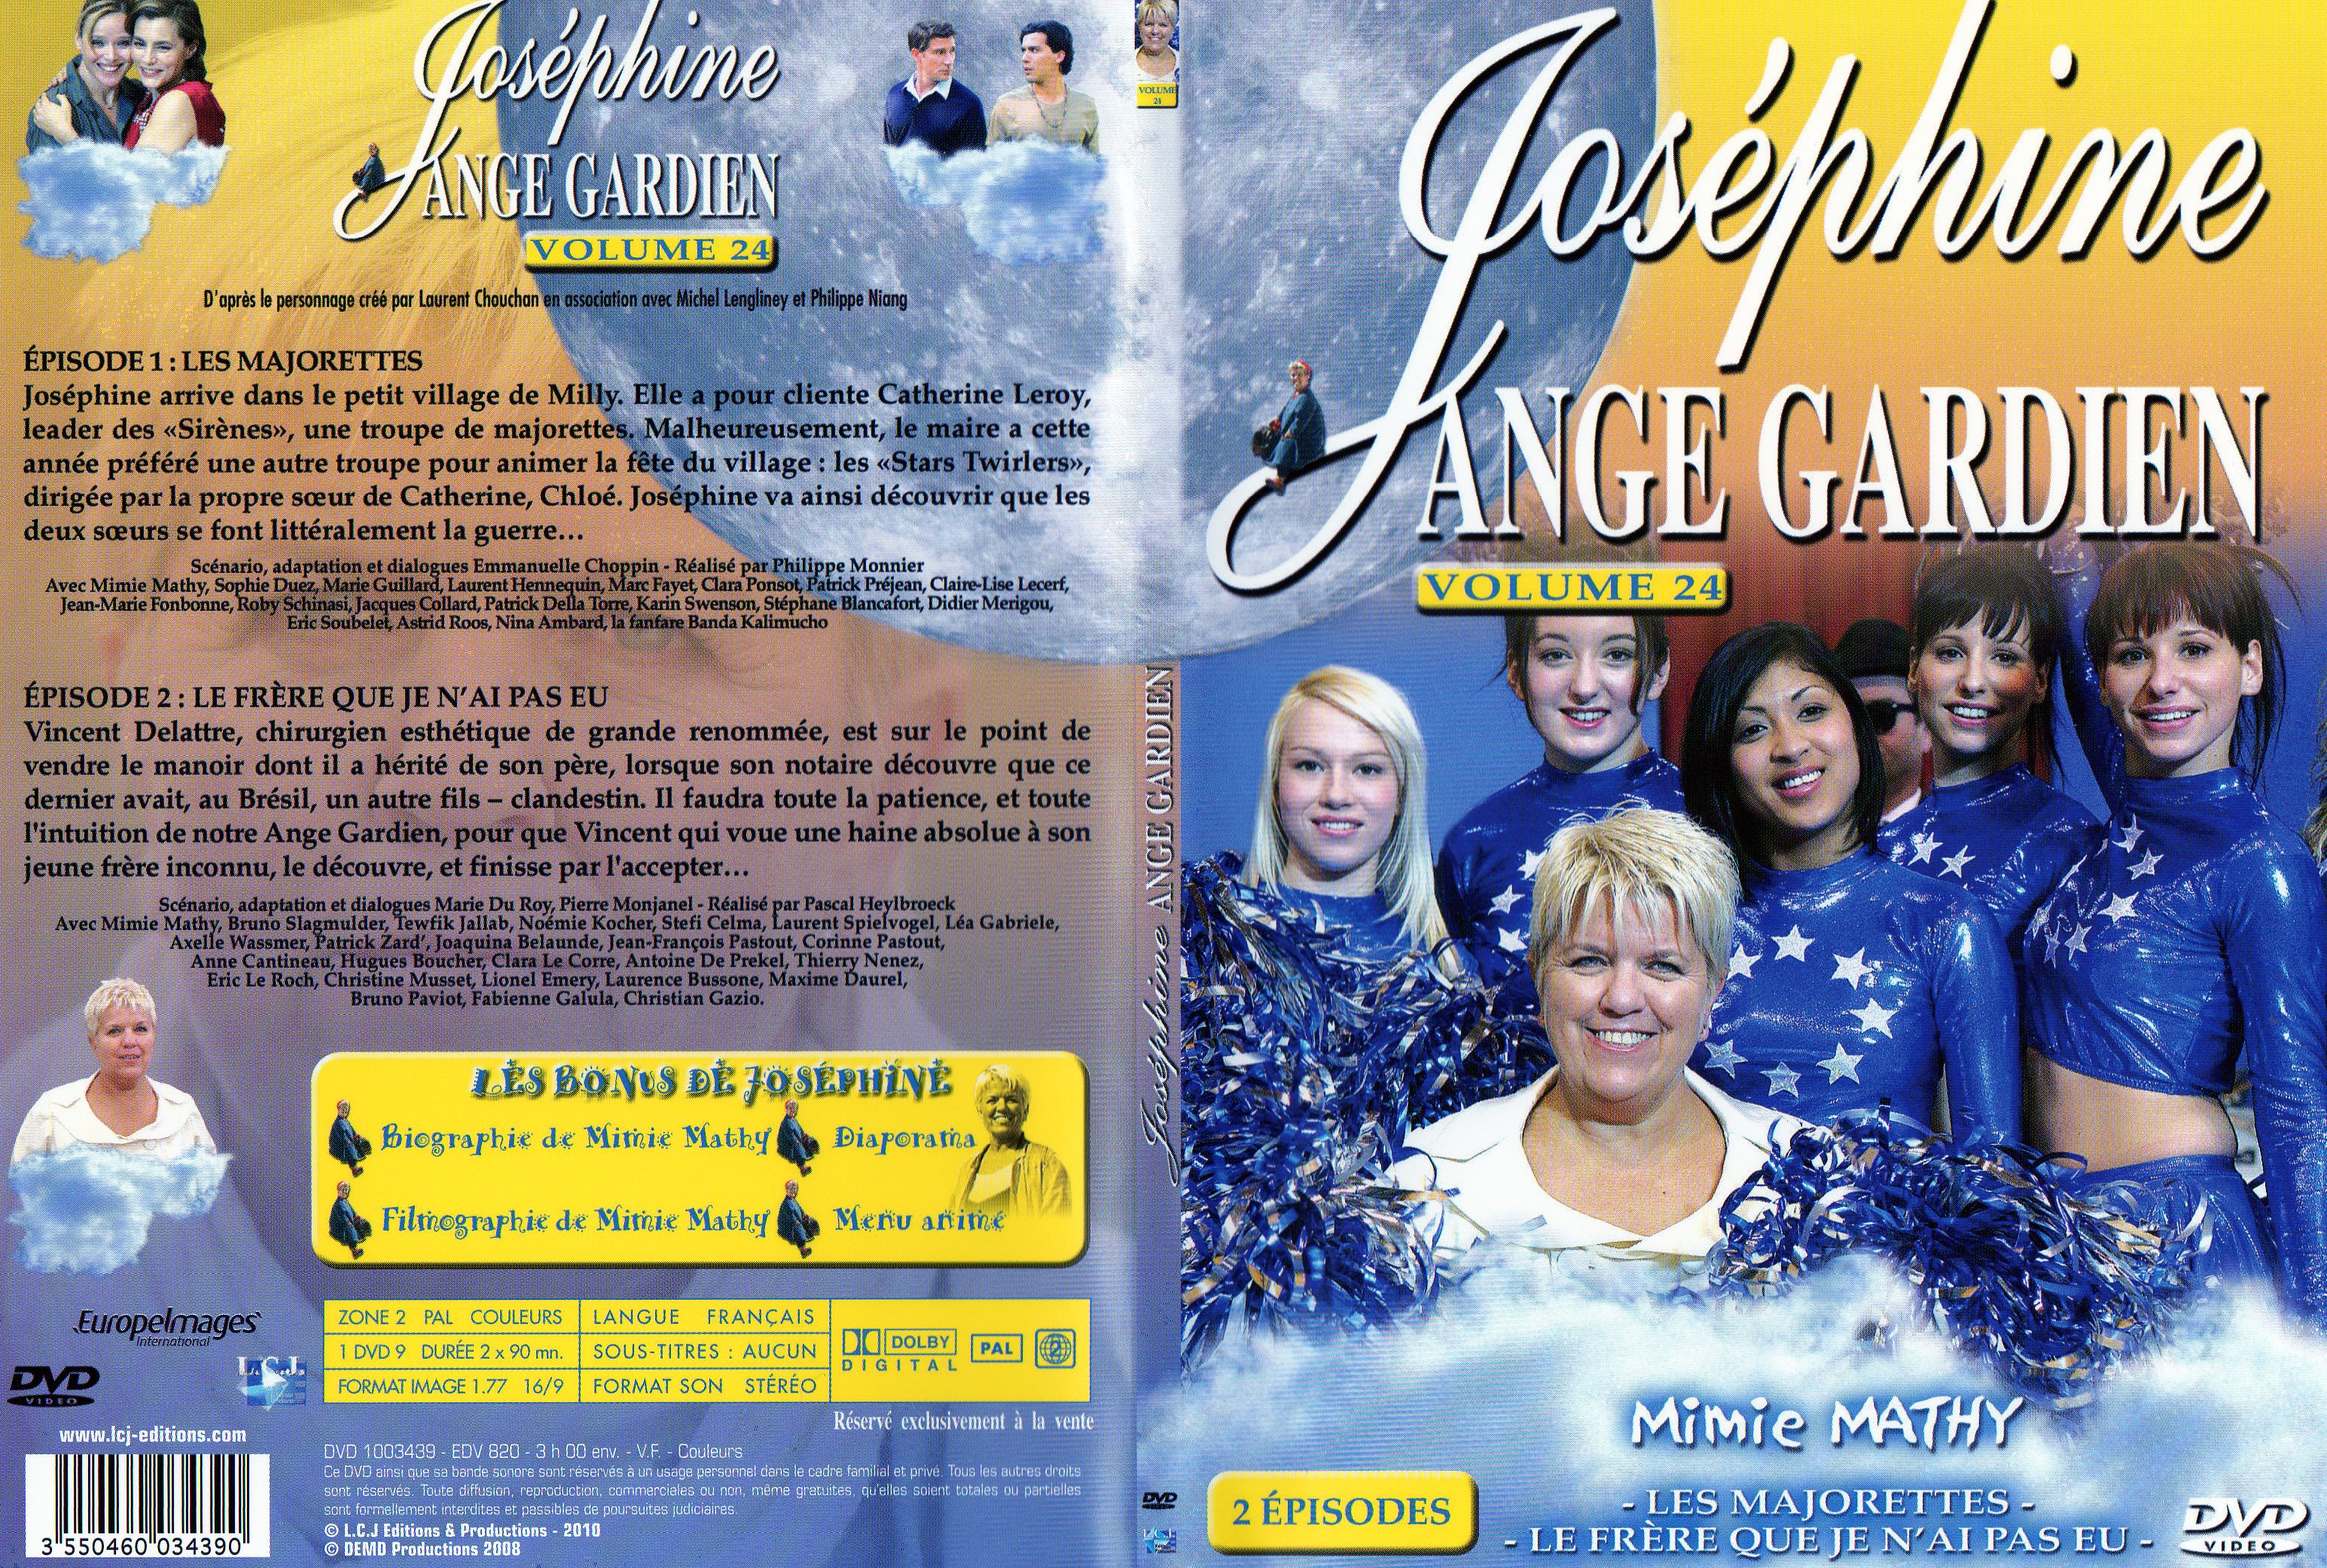 Jaquette DVD Josphine Ange Gardien saison 5 DVD 24